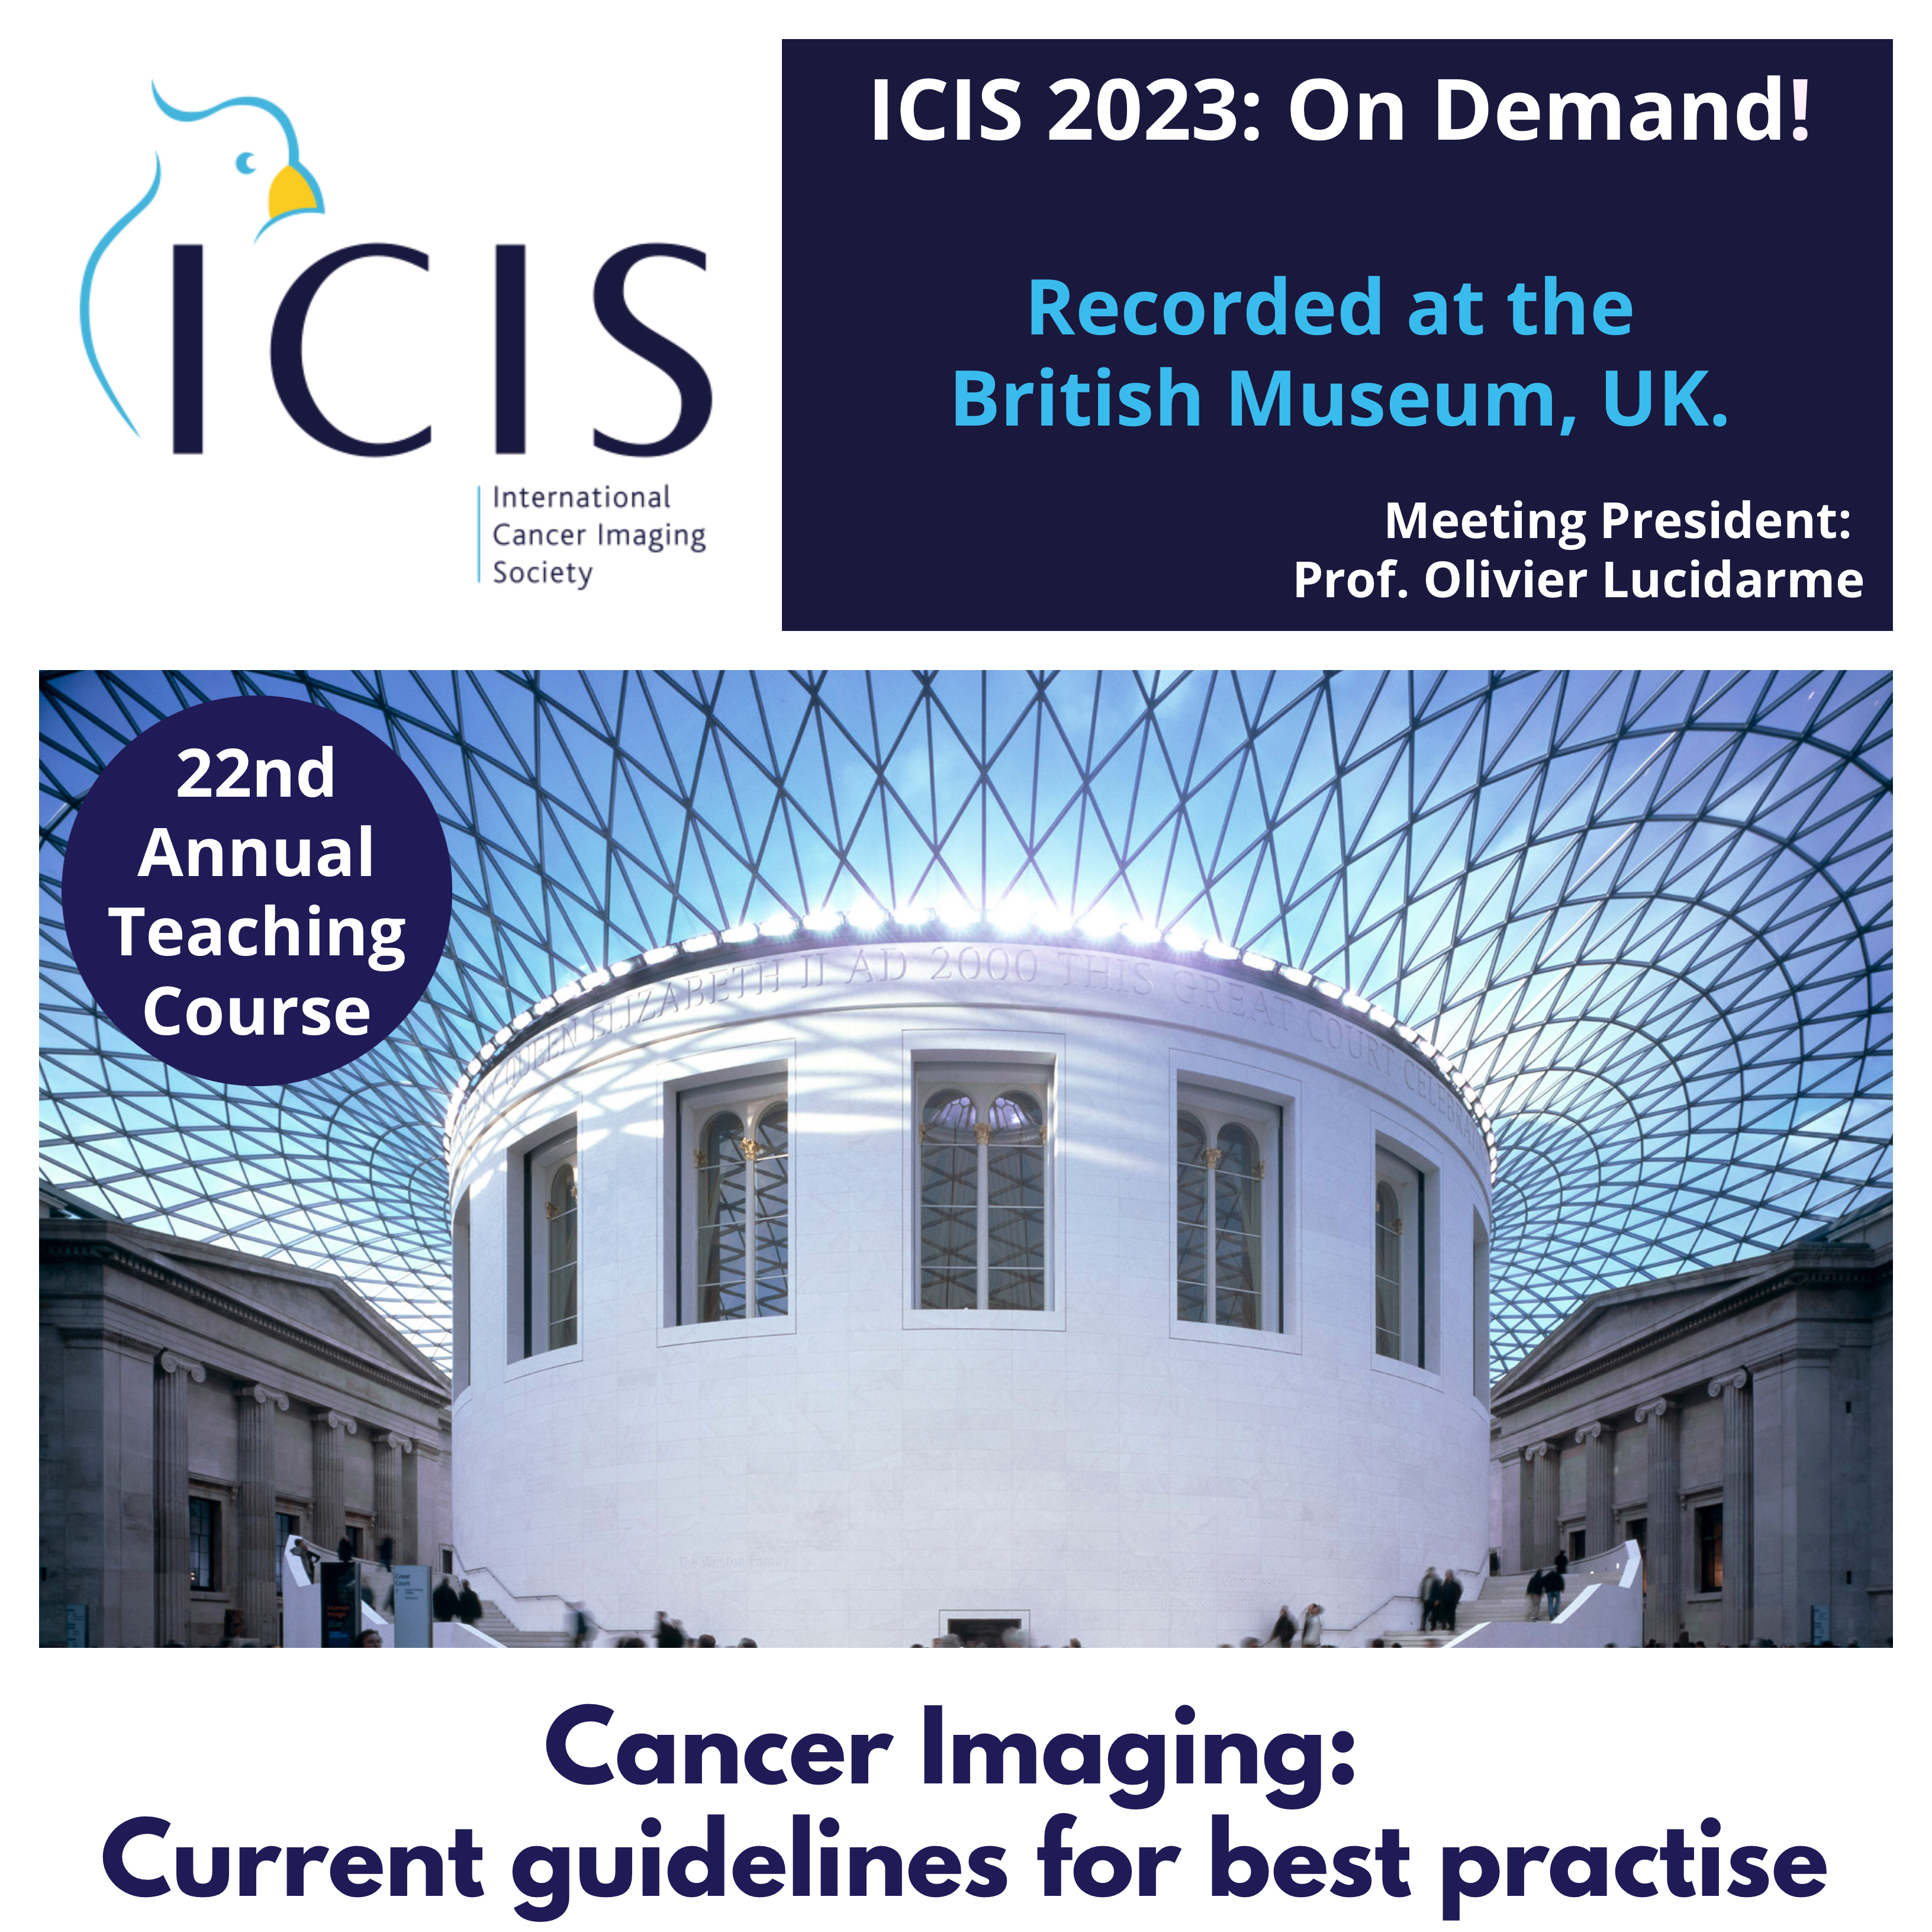 ICIS 2023 - On Demand